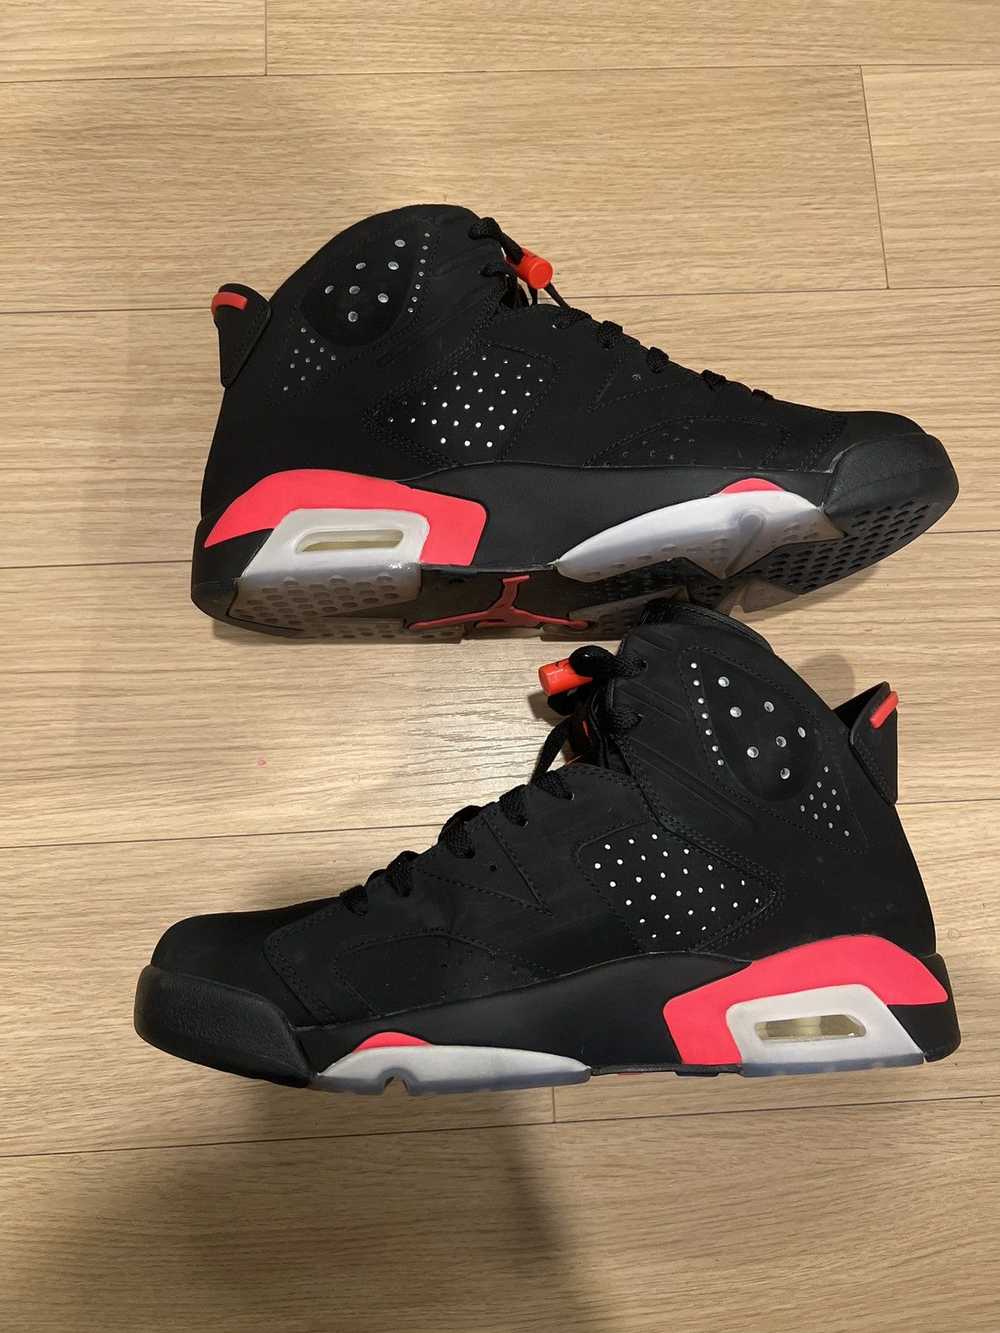 Jordan Brand × Nike Black infrared 2014 - image 6